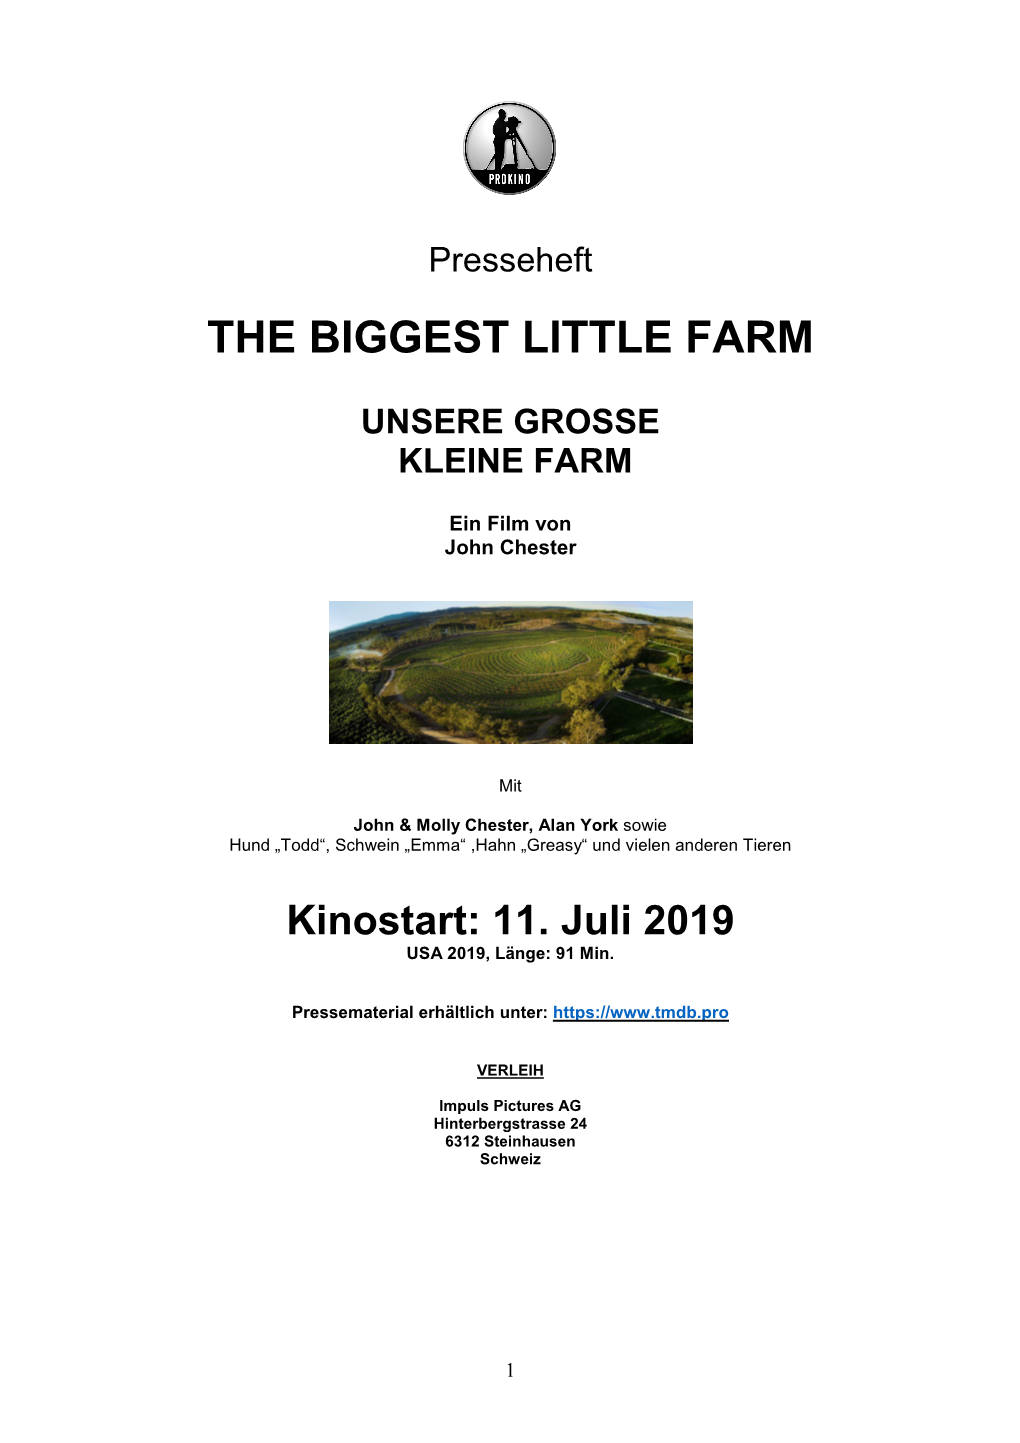 THE BIGGEST LITTLE FARM Presseheft D